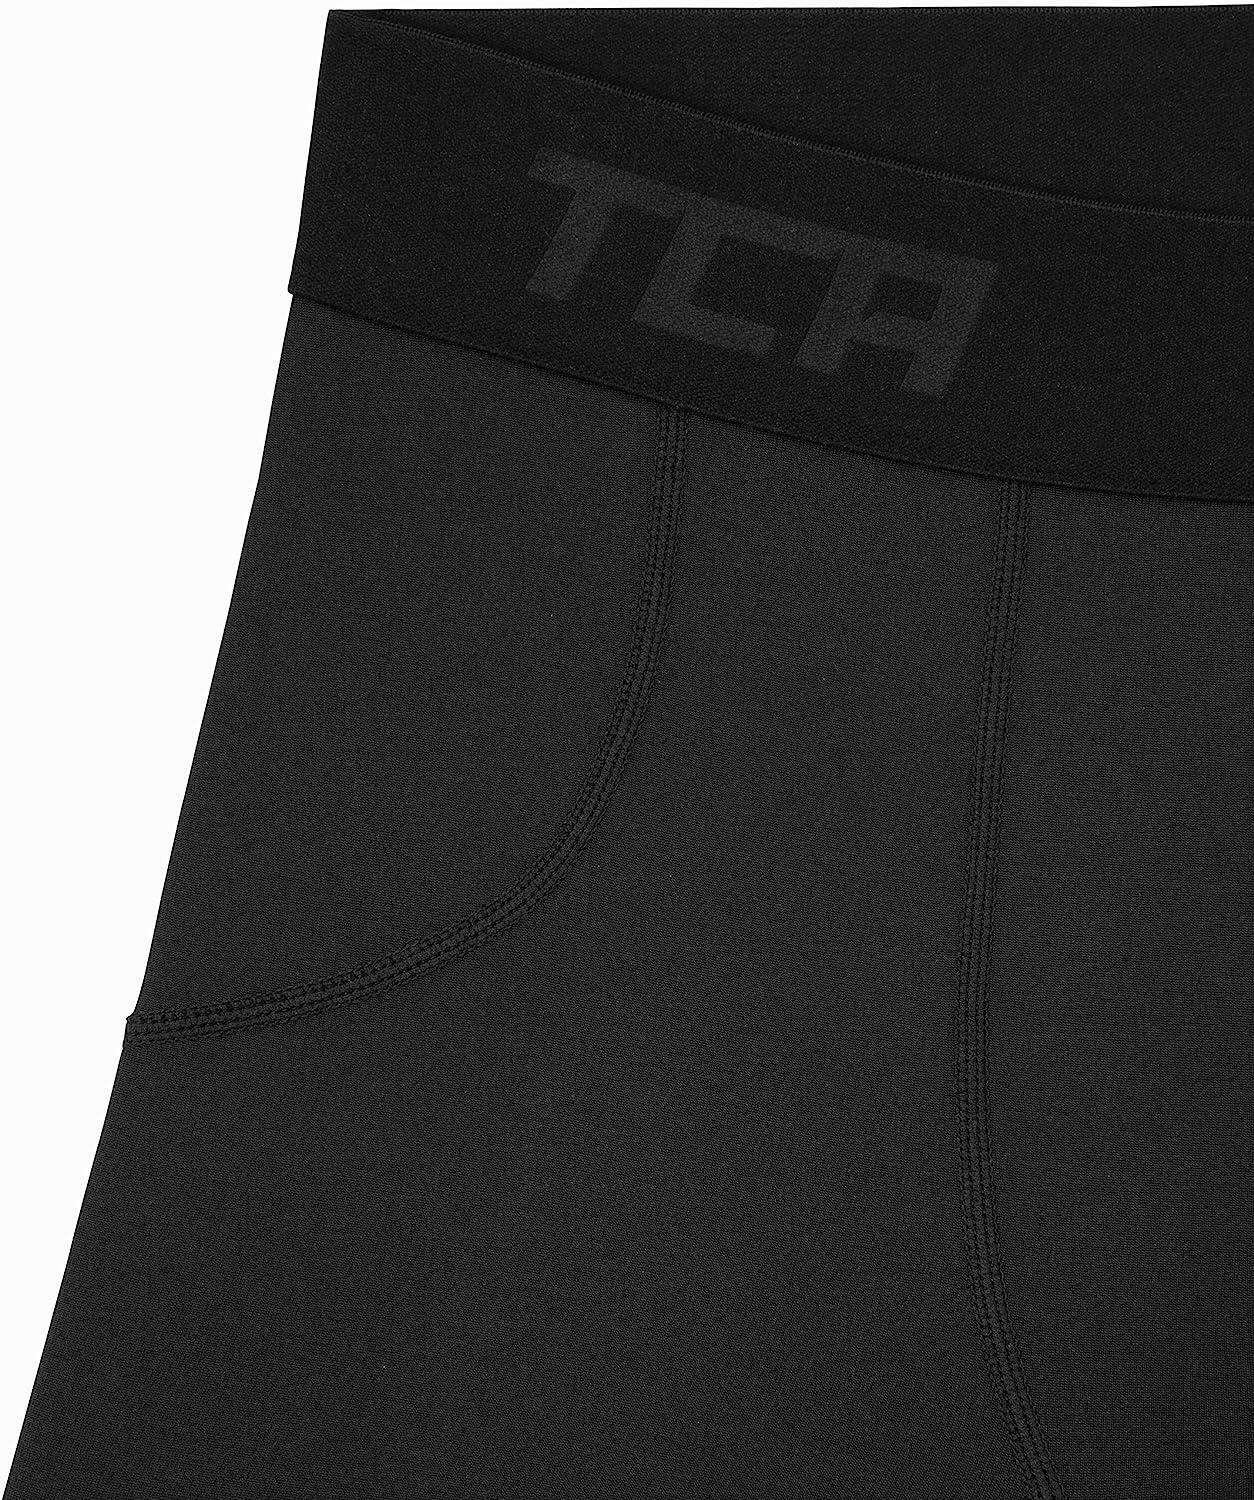 TCA Boys' SuperThermal Compression Base Layer Thermal Under Shorts